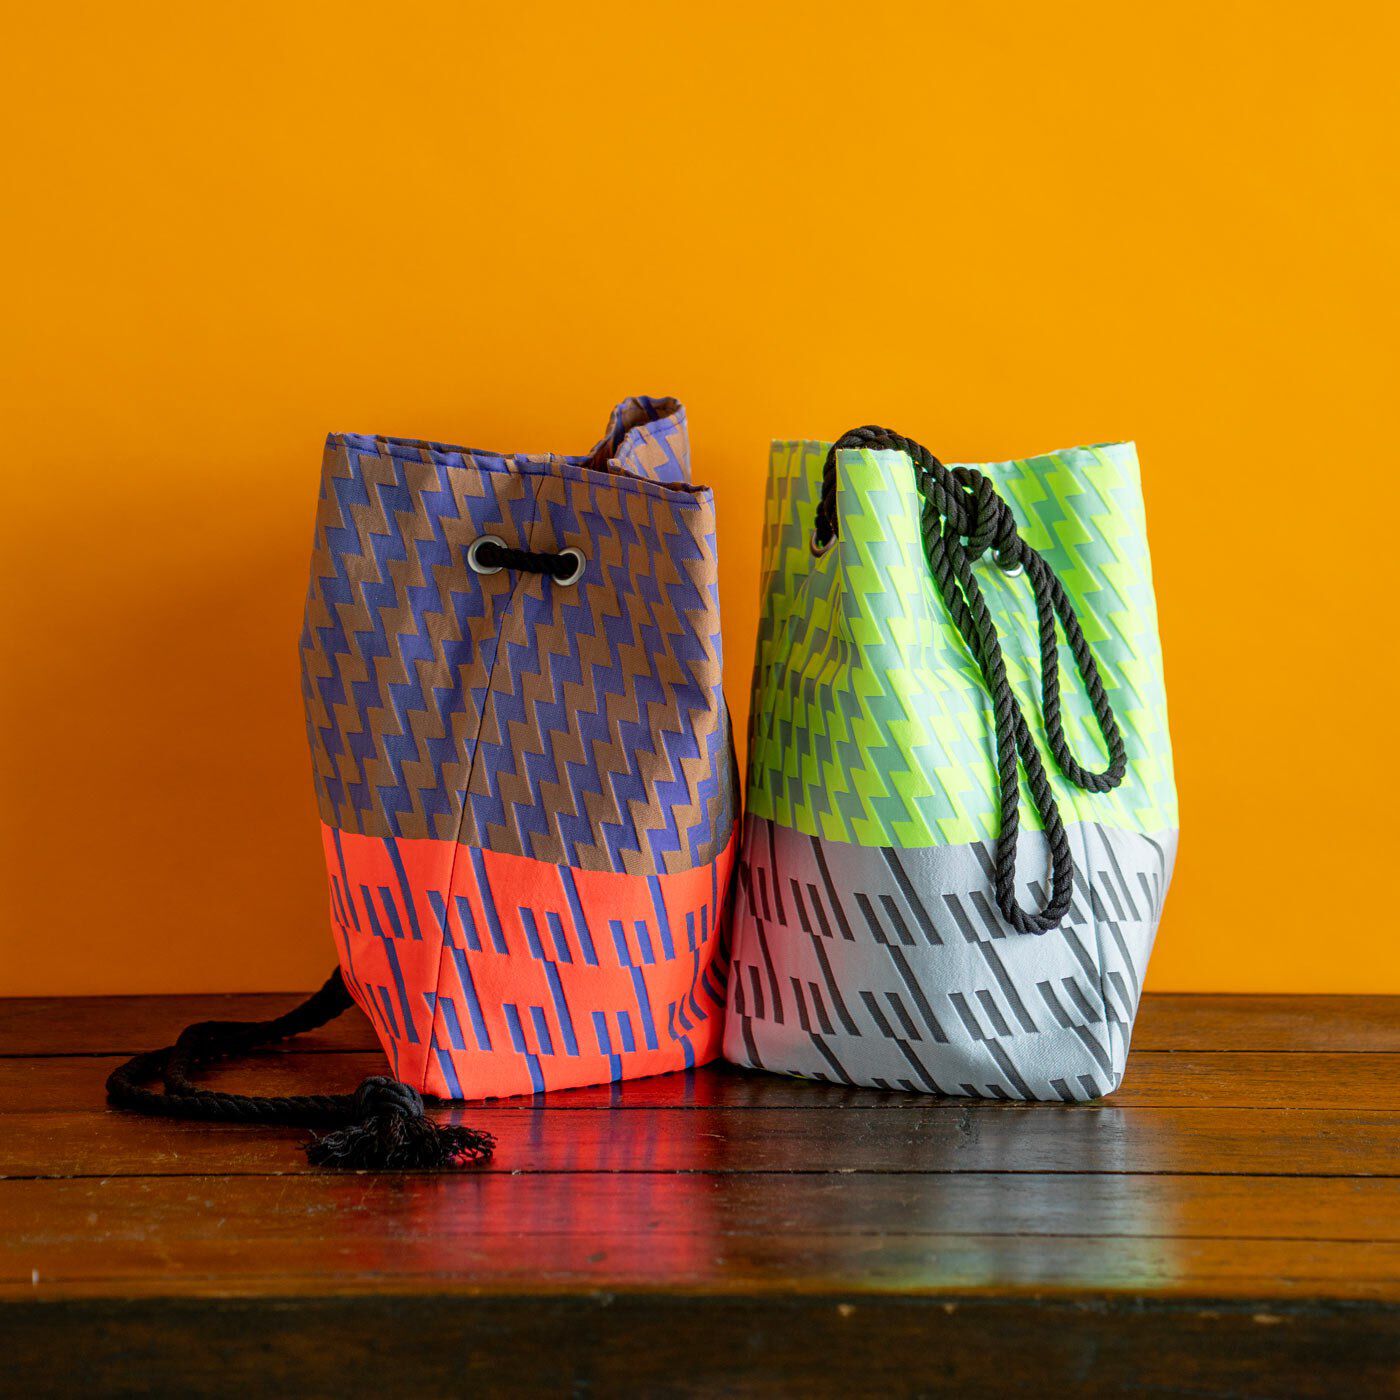 ＆Stories|テキスタイルデザイナーと作った 播州織のダズリングバッグ〈ナイトネオン〉|持つだけで一気にテンションが上がるバッグを、ぜひこの夏のお出かけの相棒に。